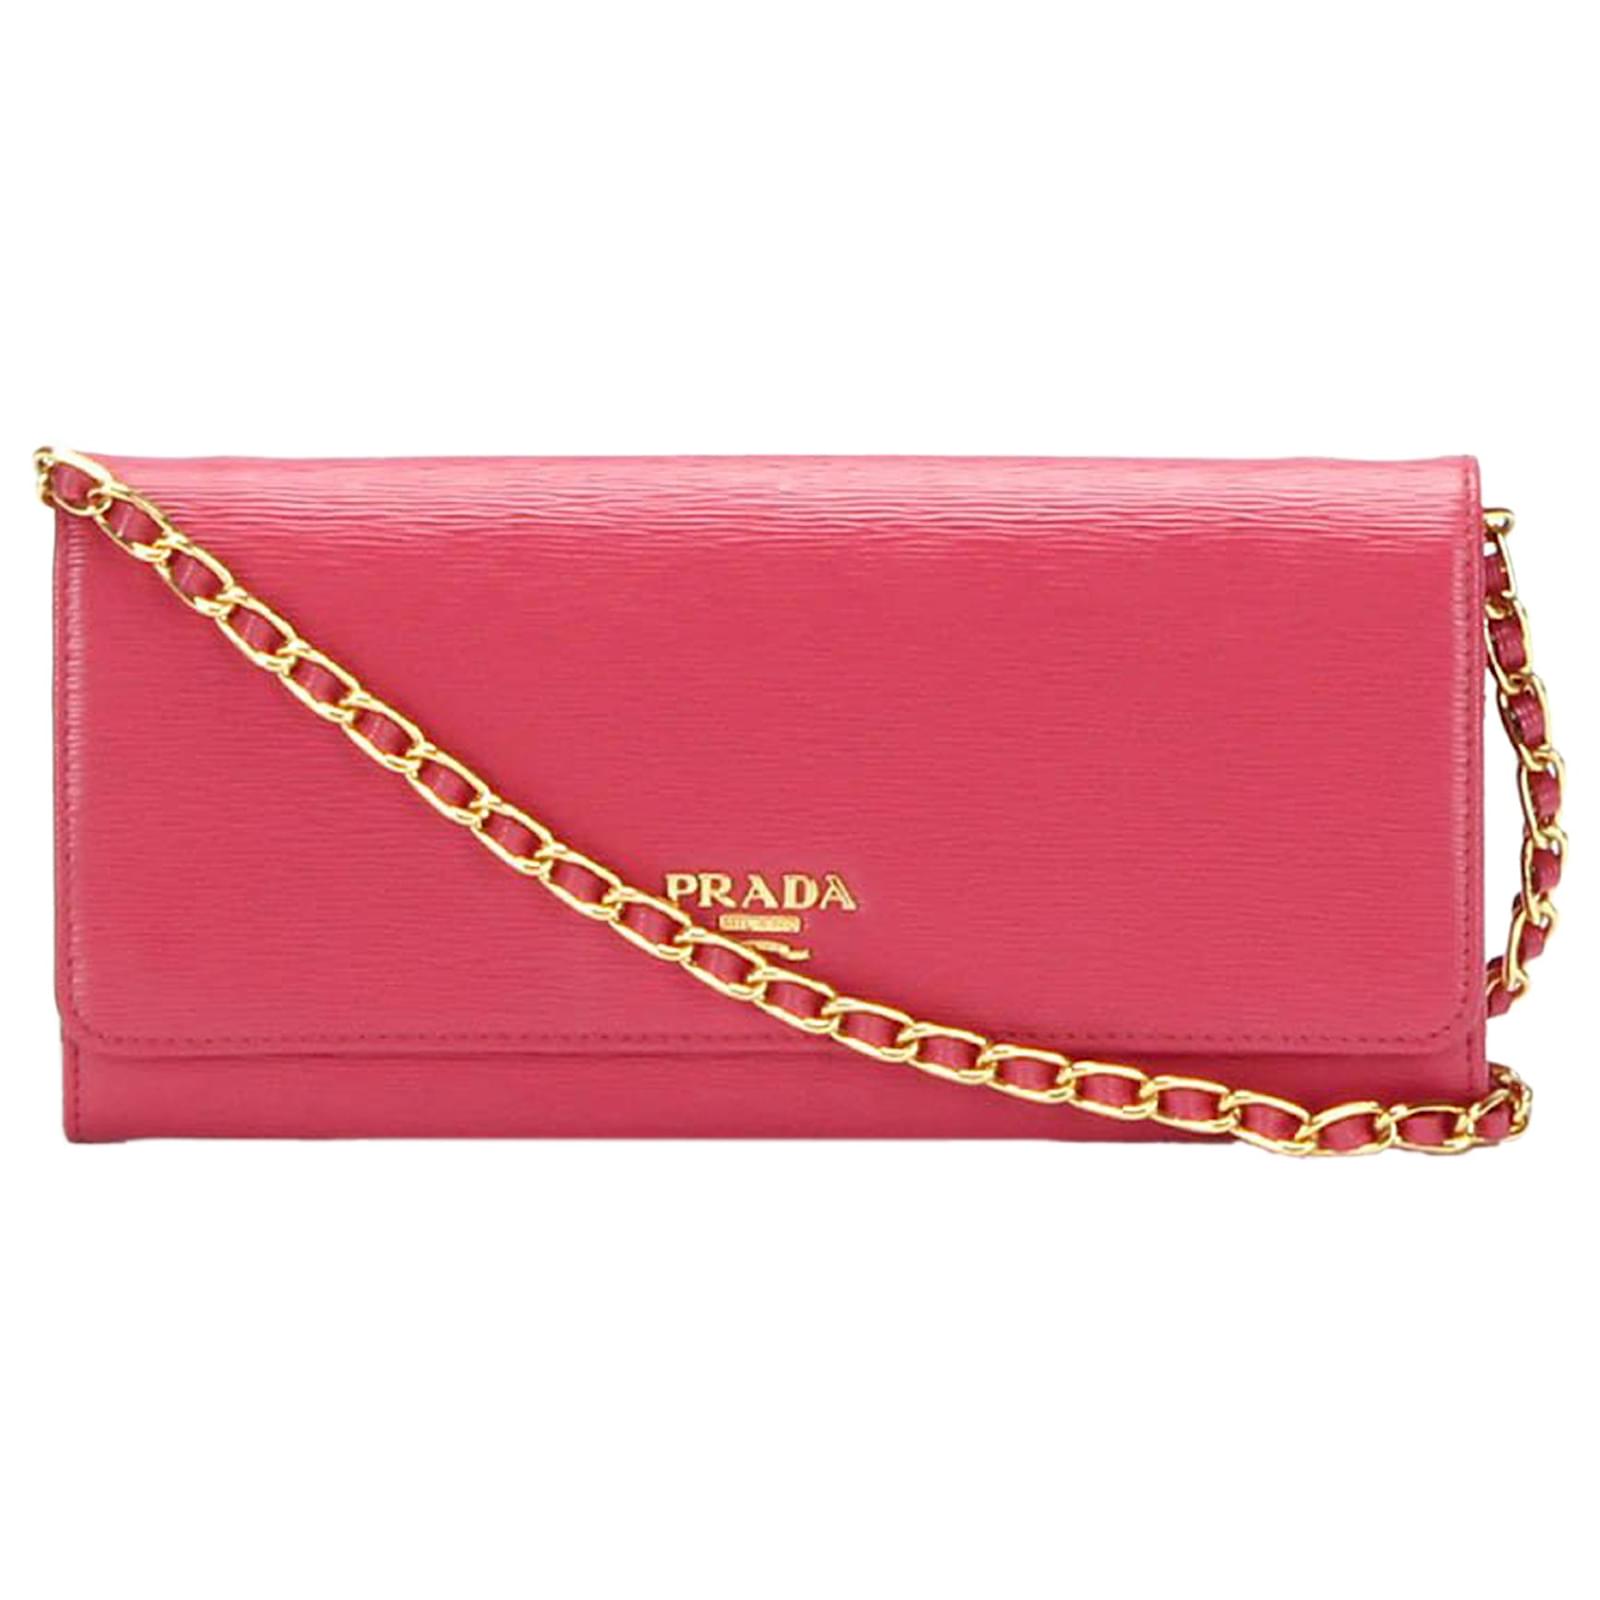 Prada Pink Saffiano Leather Wallet on Chain Pony-style calfskin